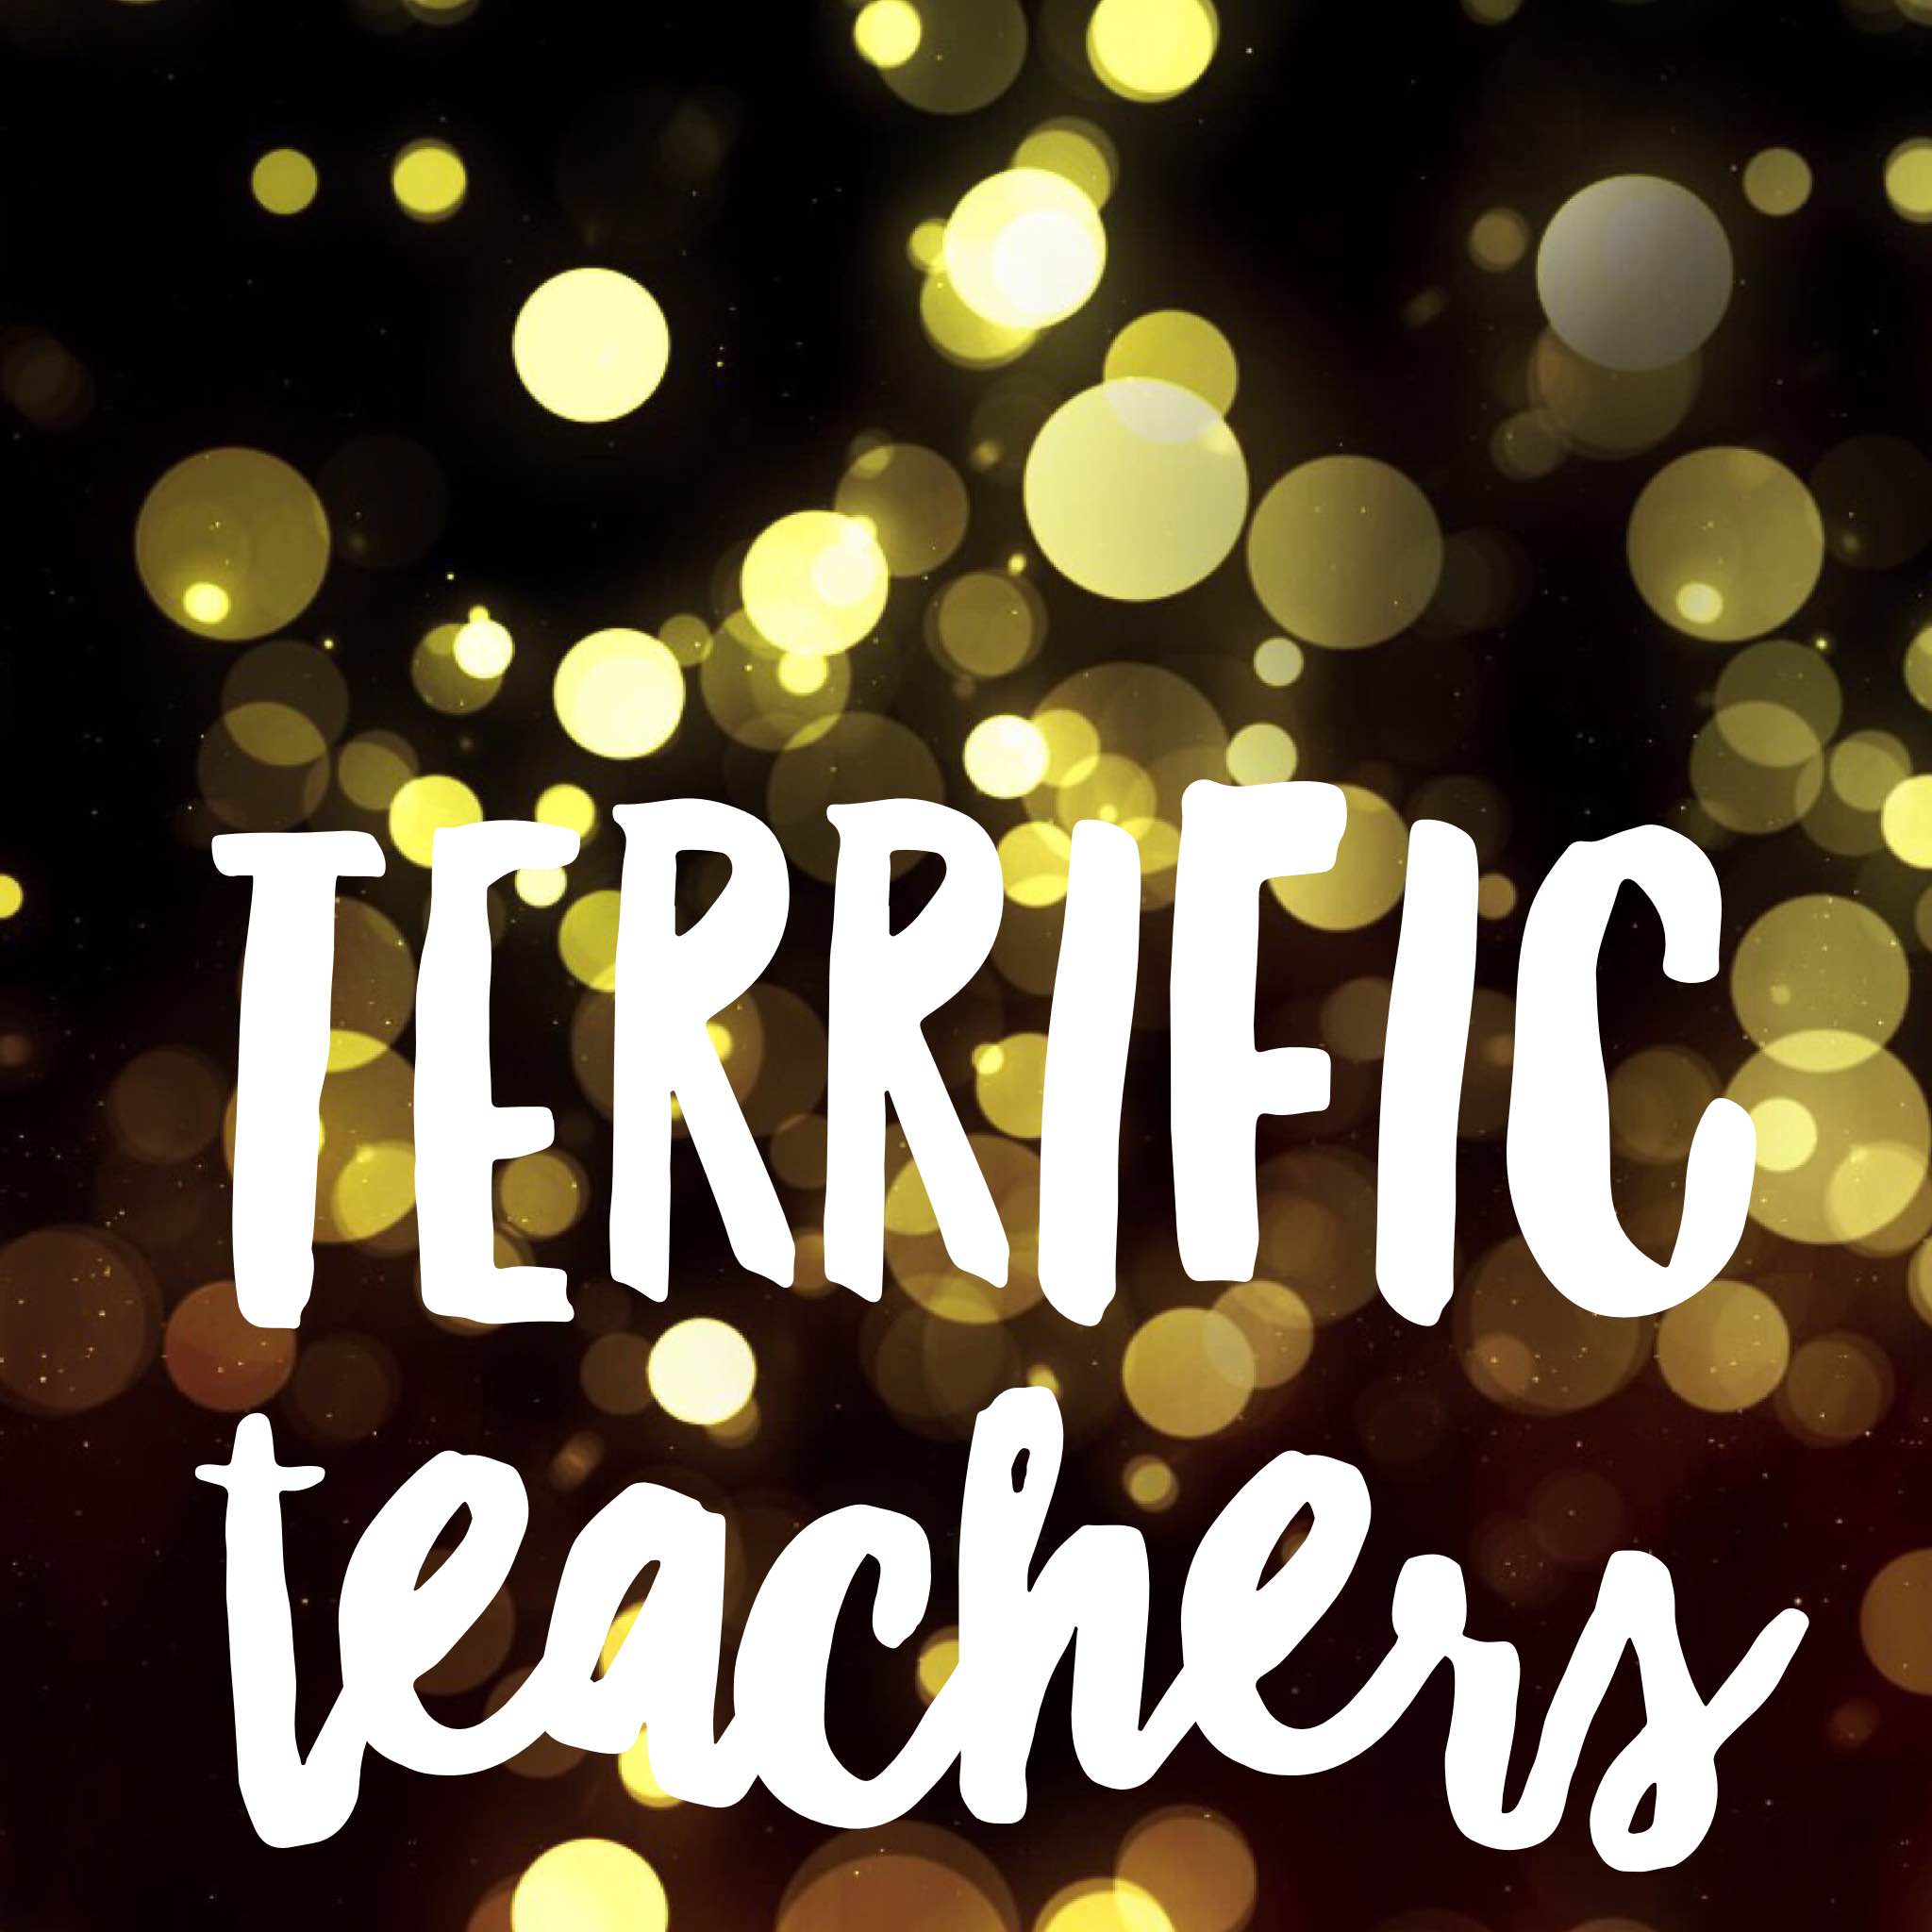 Terrific teachers title pic